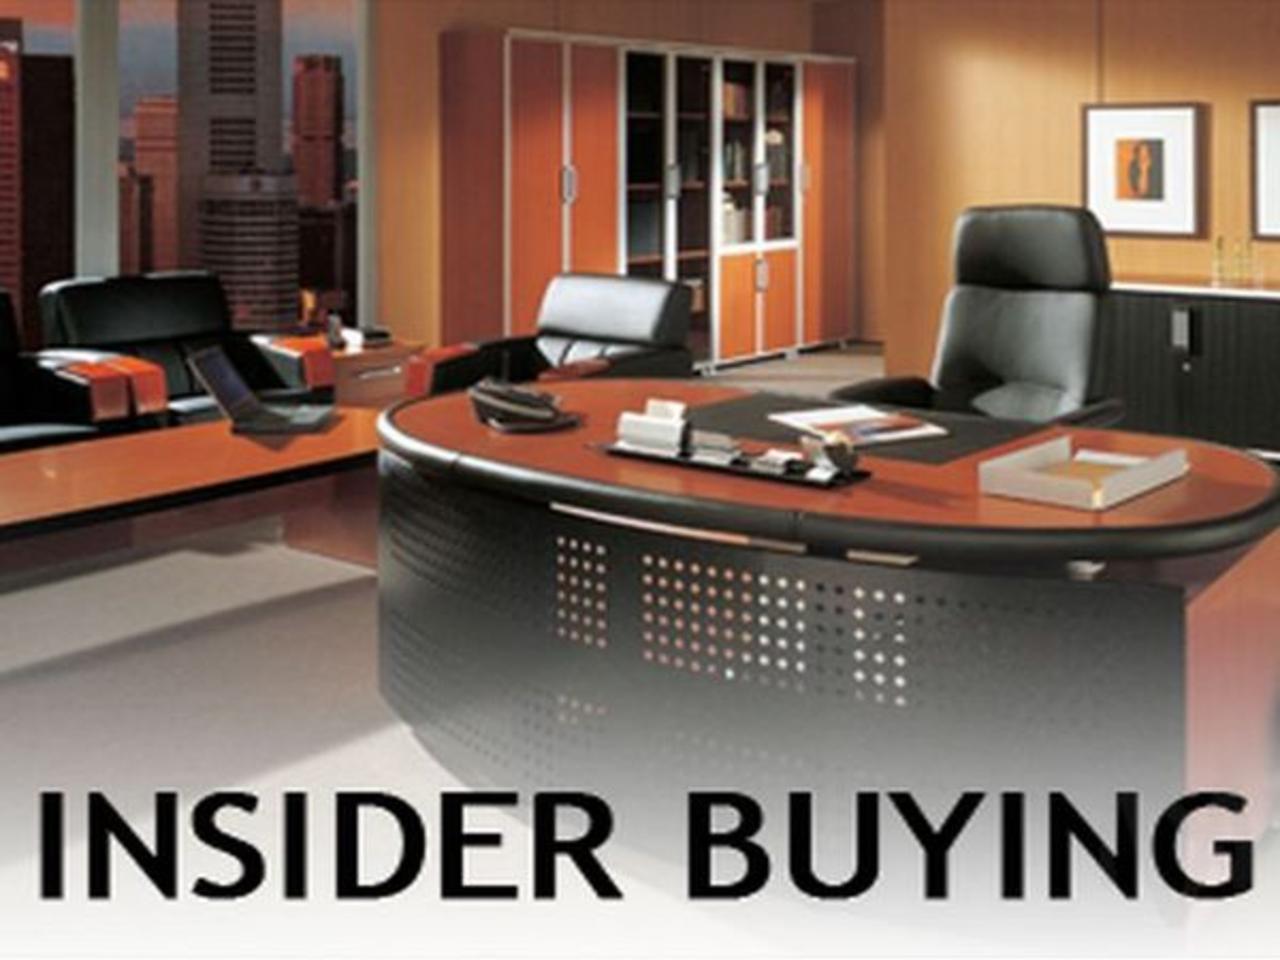 Wednesday 9/1 Insider Buying Report: STIM, CDLX